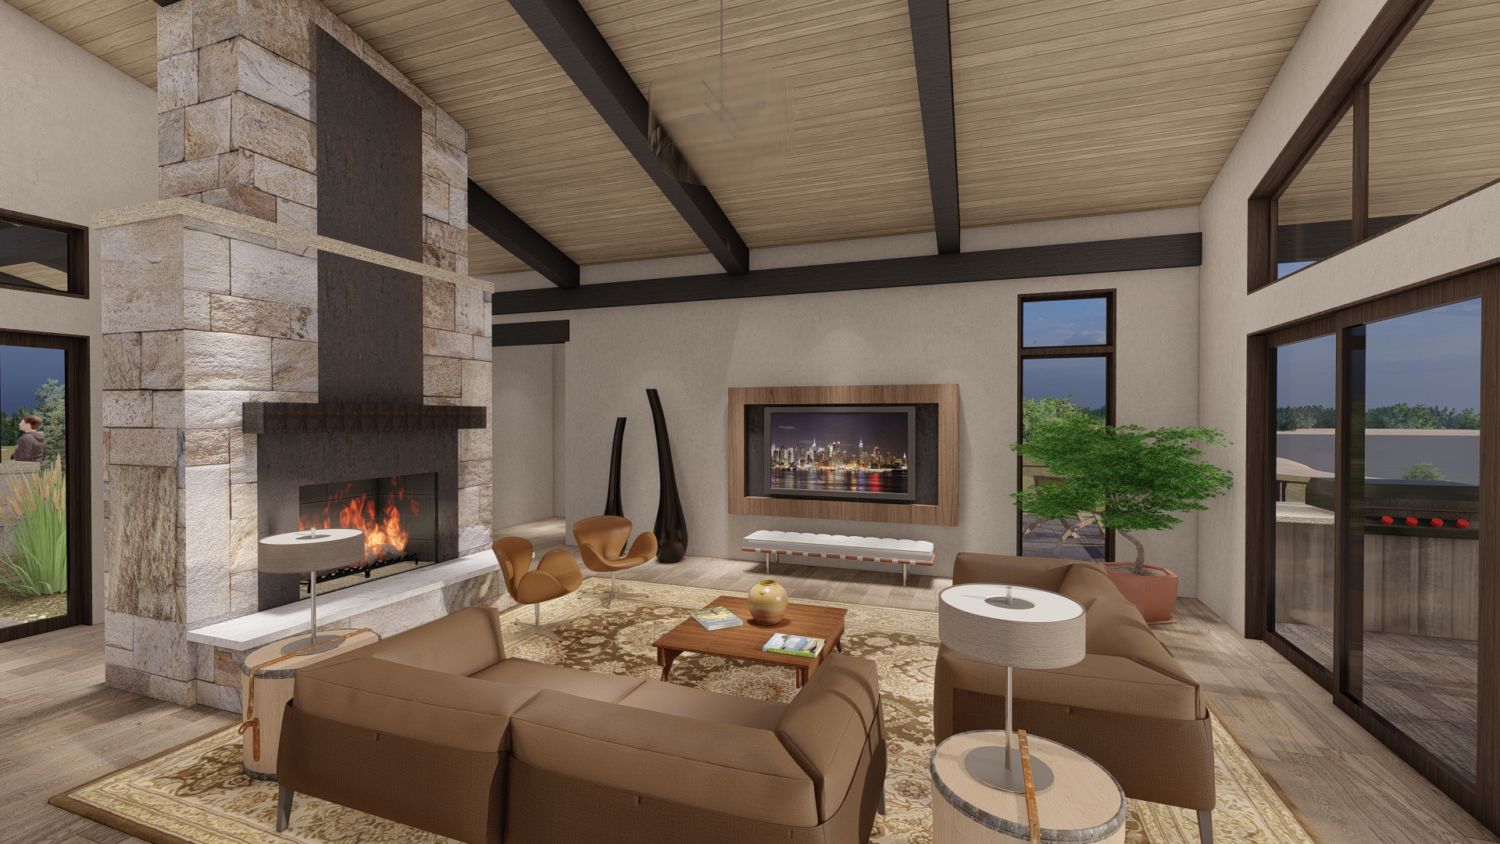 david-hueter-rendering-great-room-fireplace